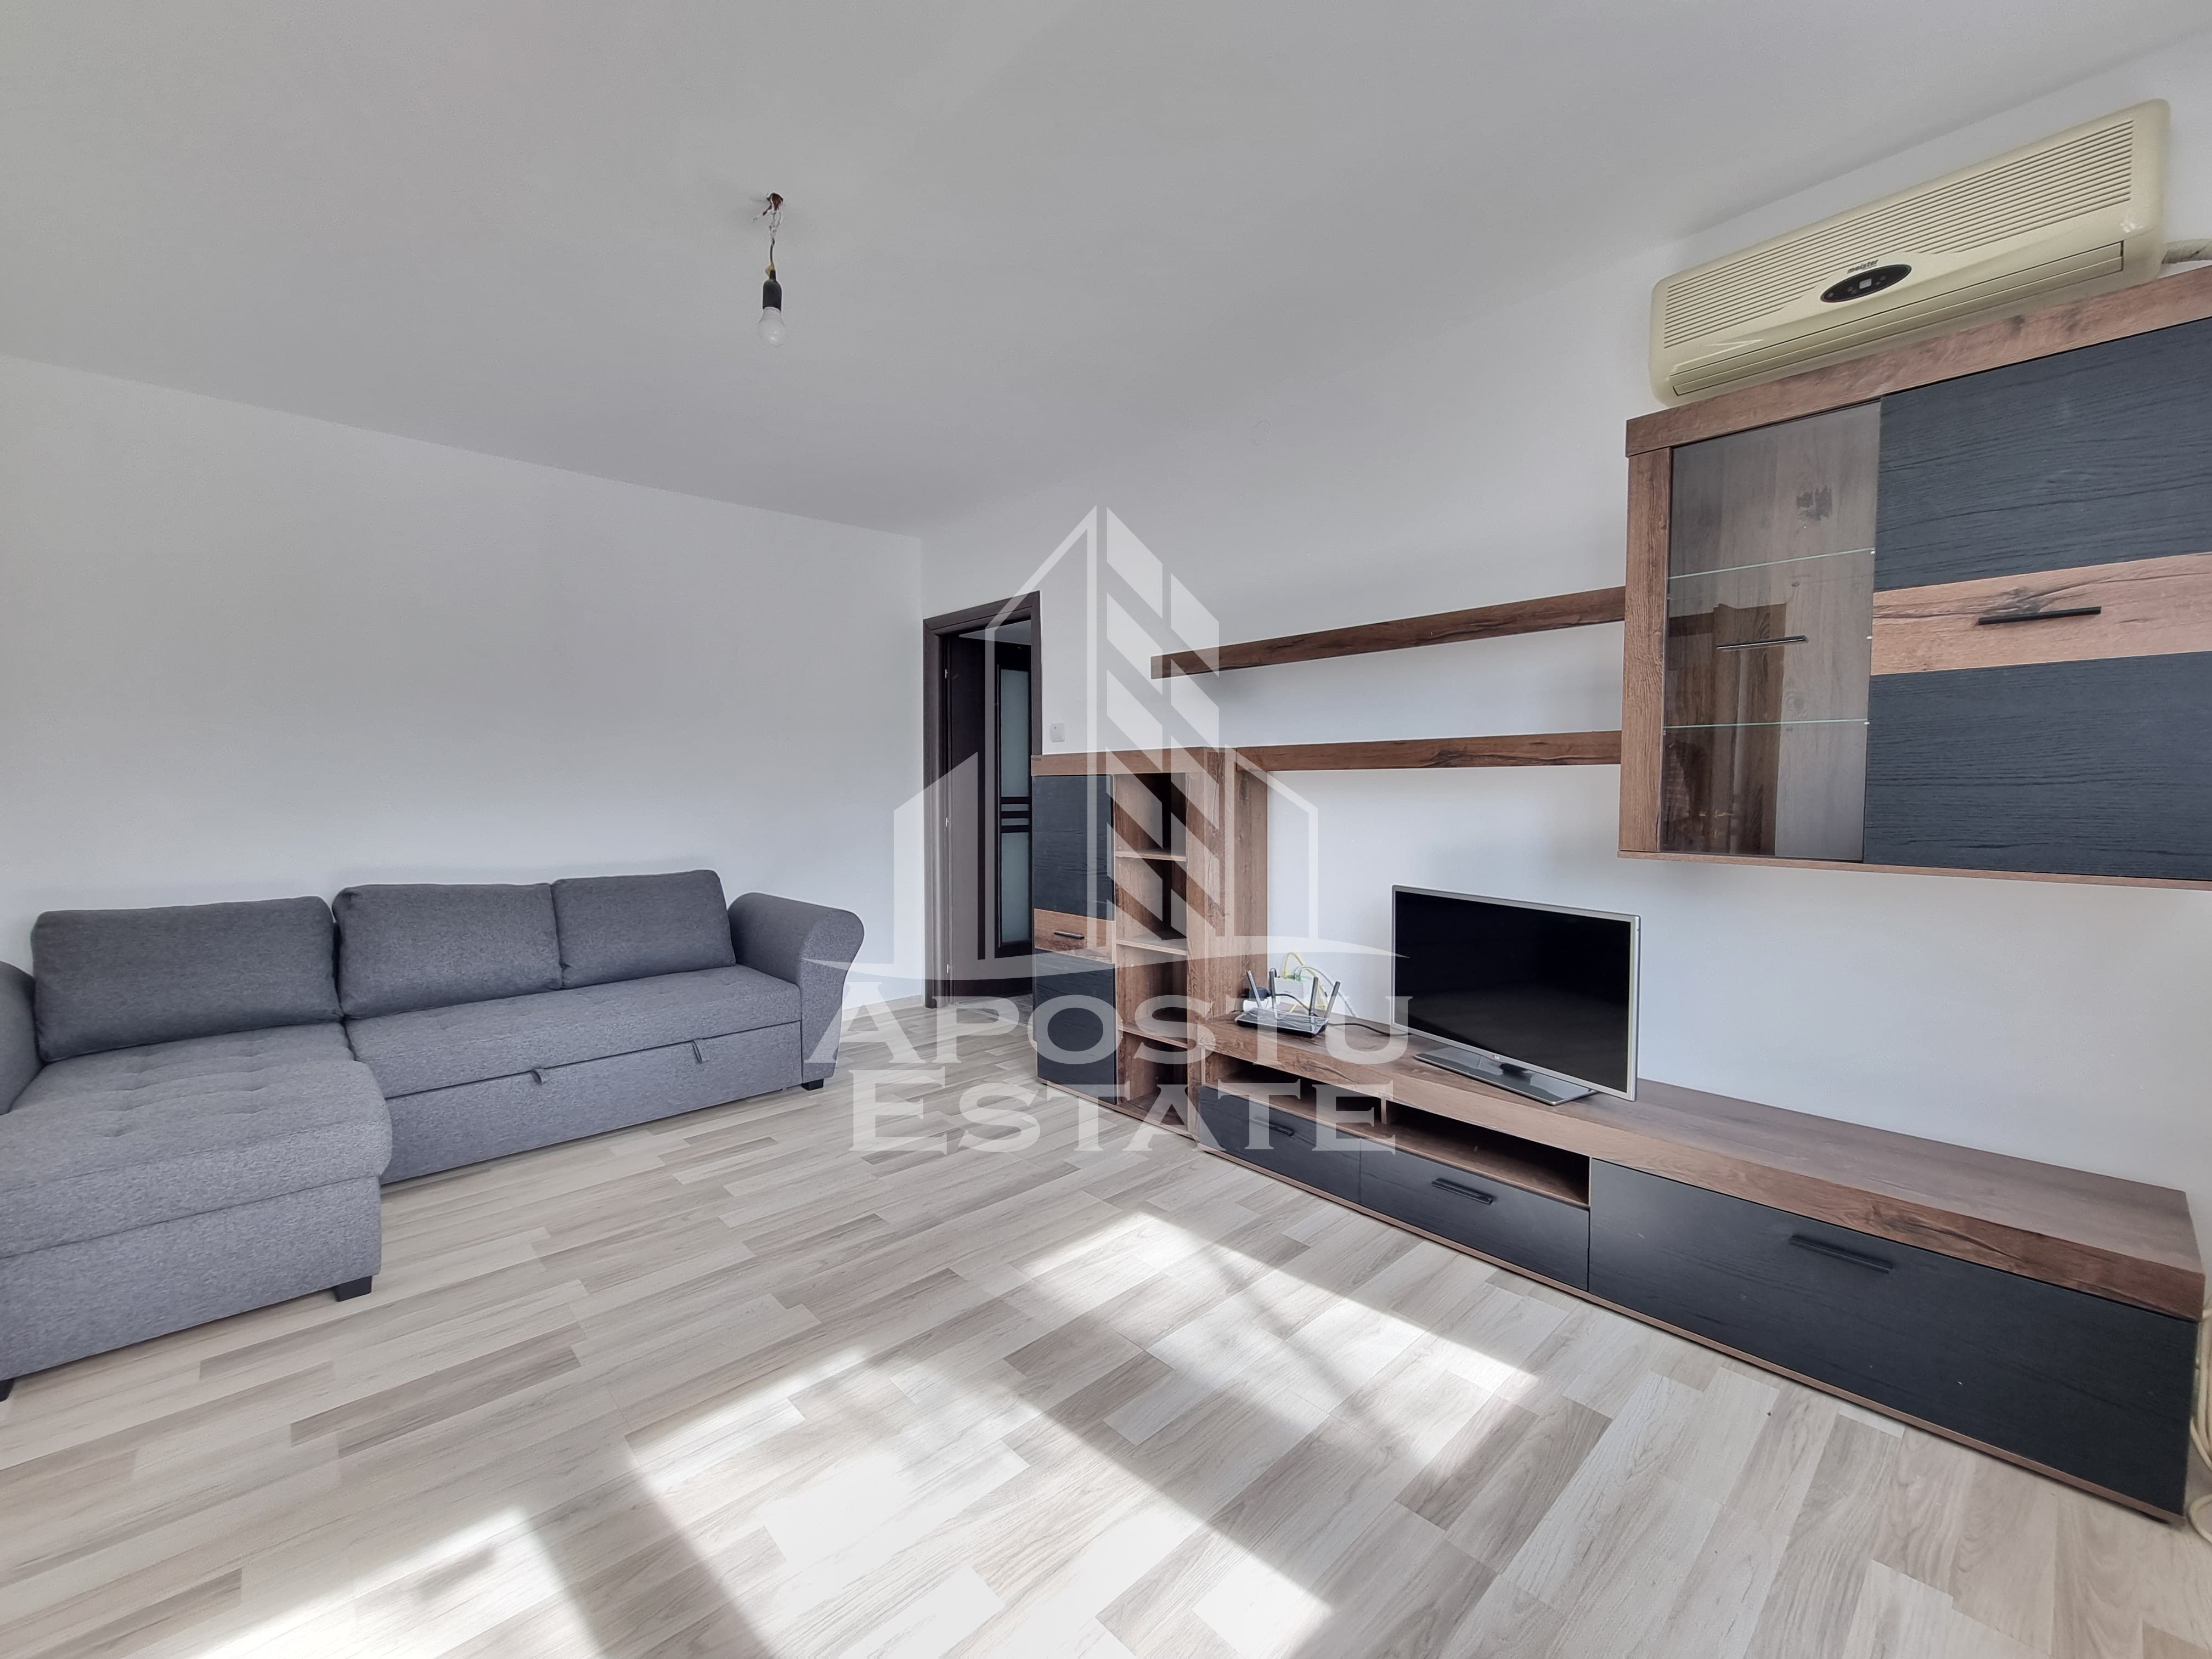 Apartament cu 2 camere, renovat, etaj intermediar, zona Dacia